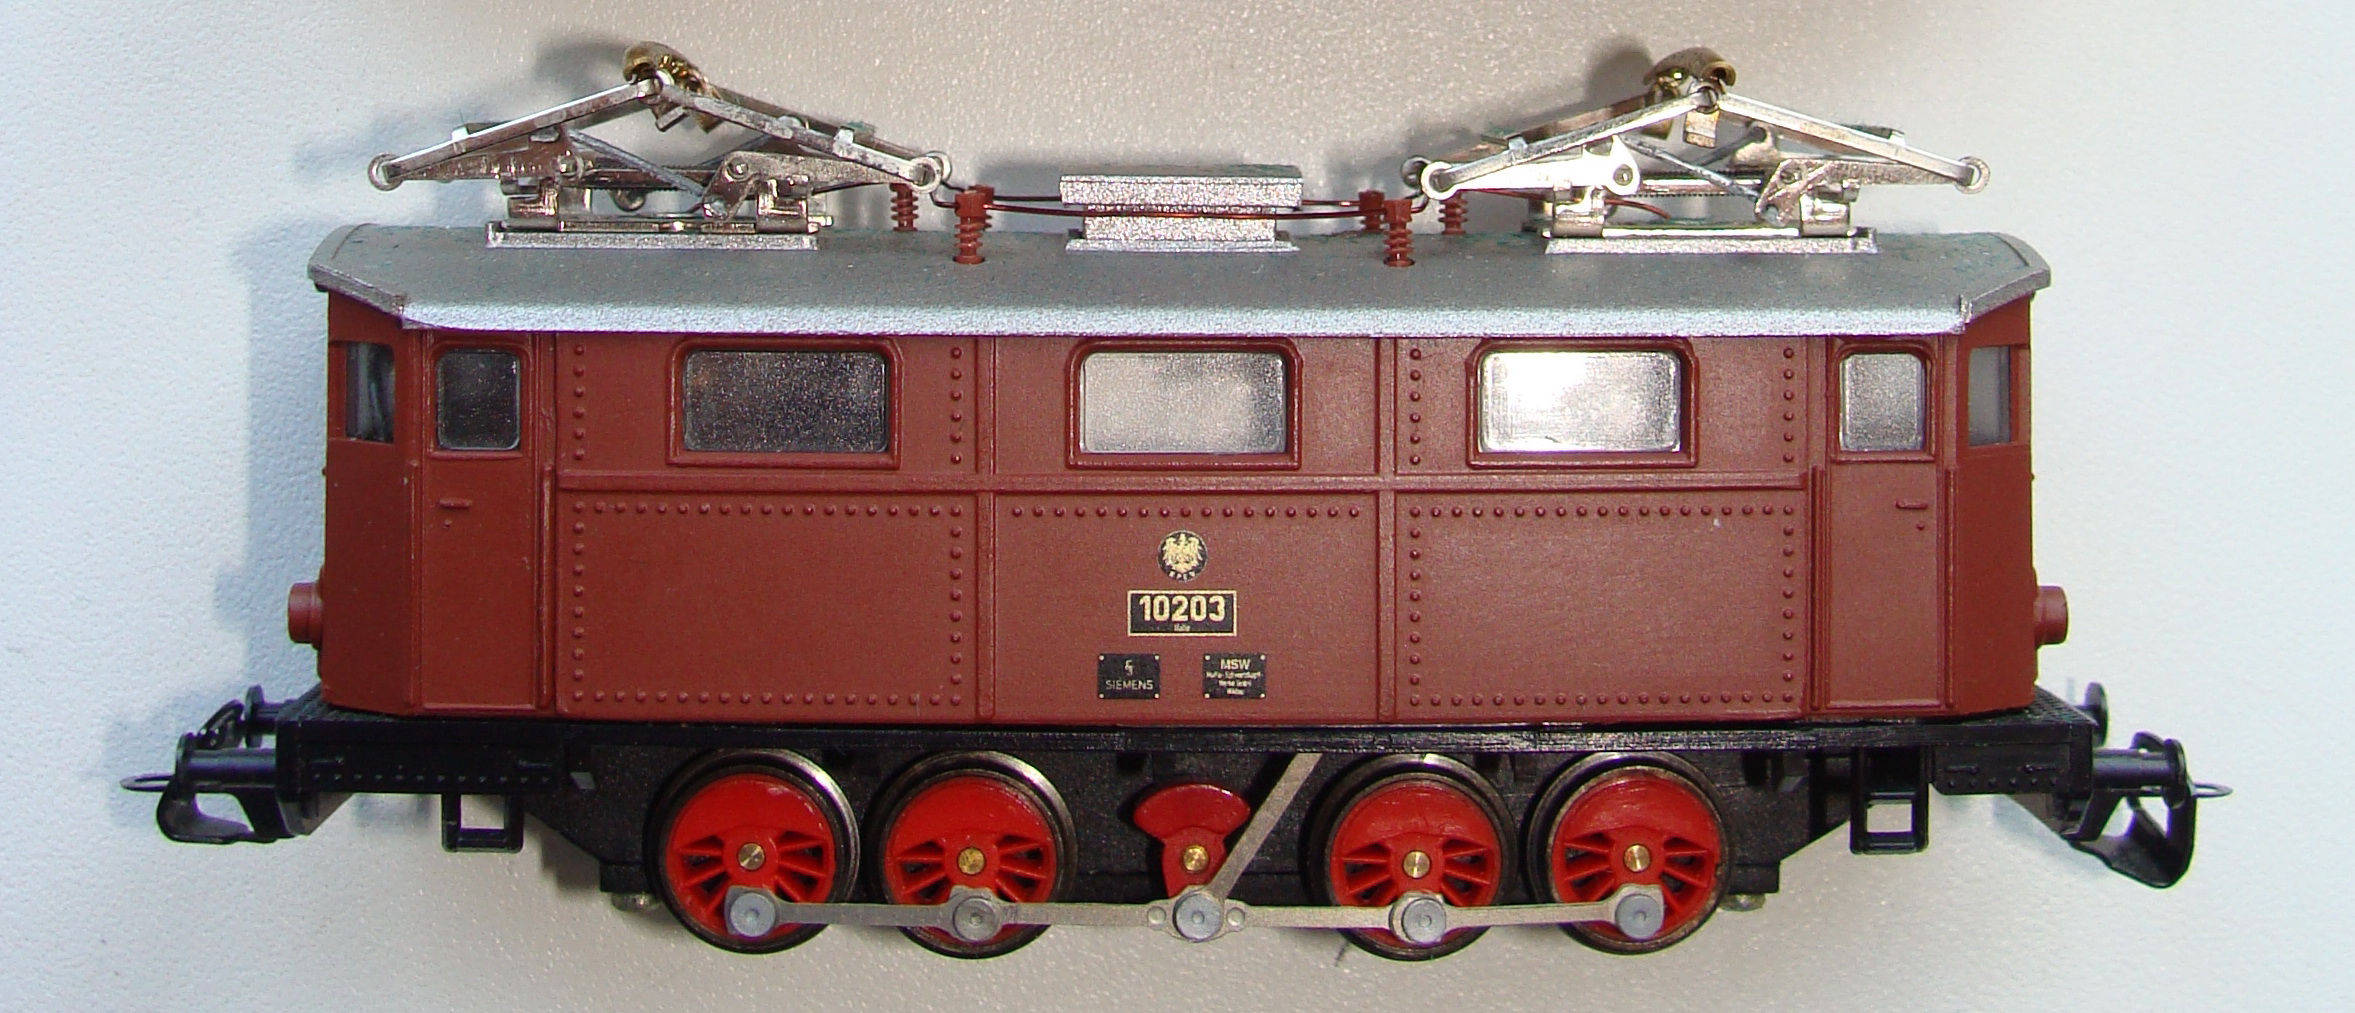 Модель электровоза Е70 производства Ing. Buro Oelschlagel 